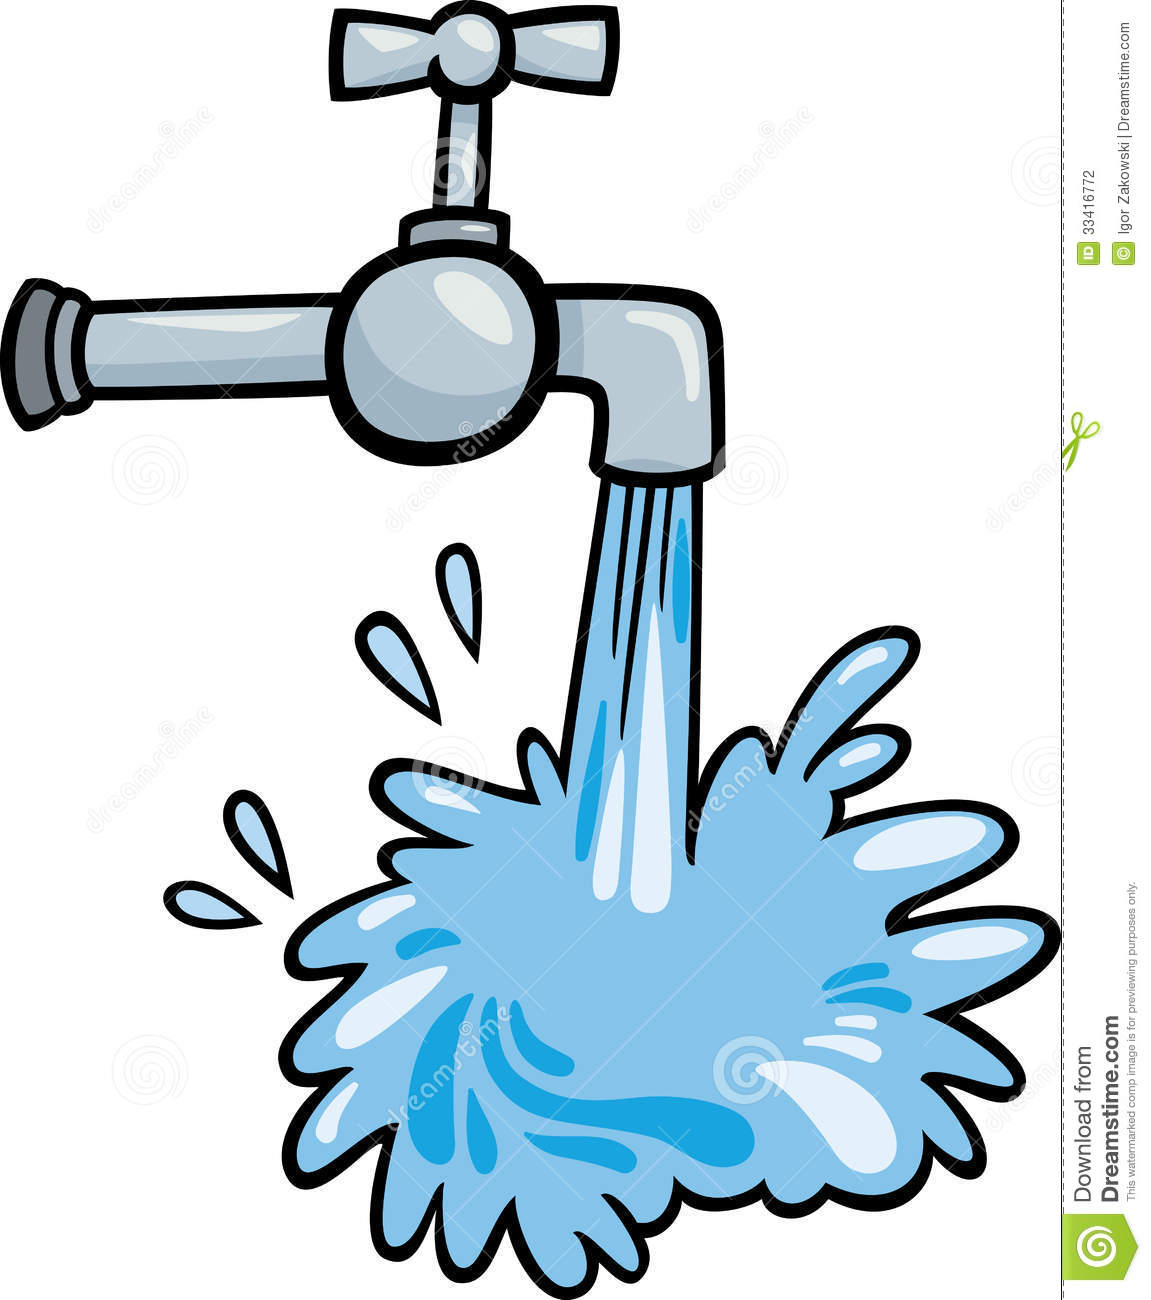 Water Tap Clip Art Cartoon Illustration Stock Photography   Image